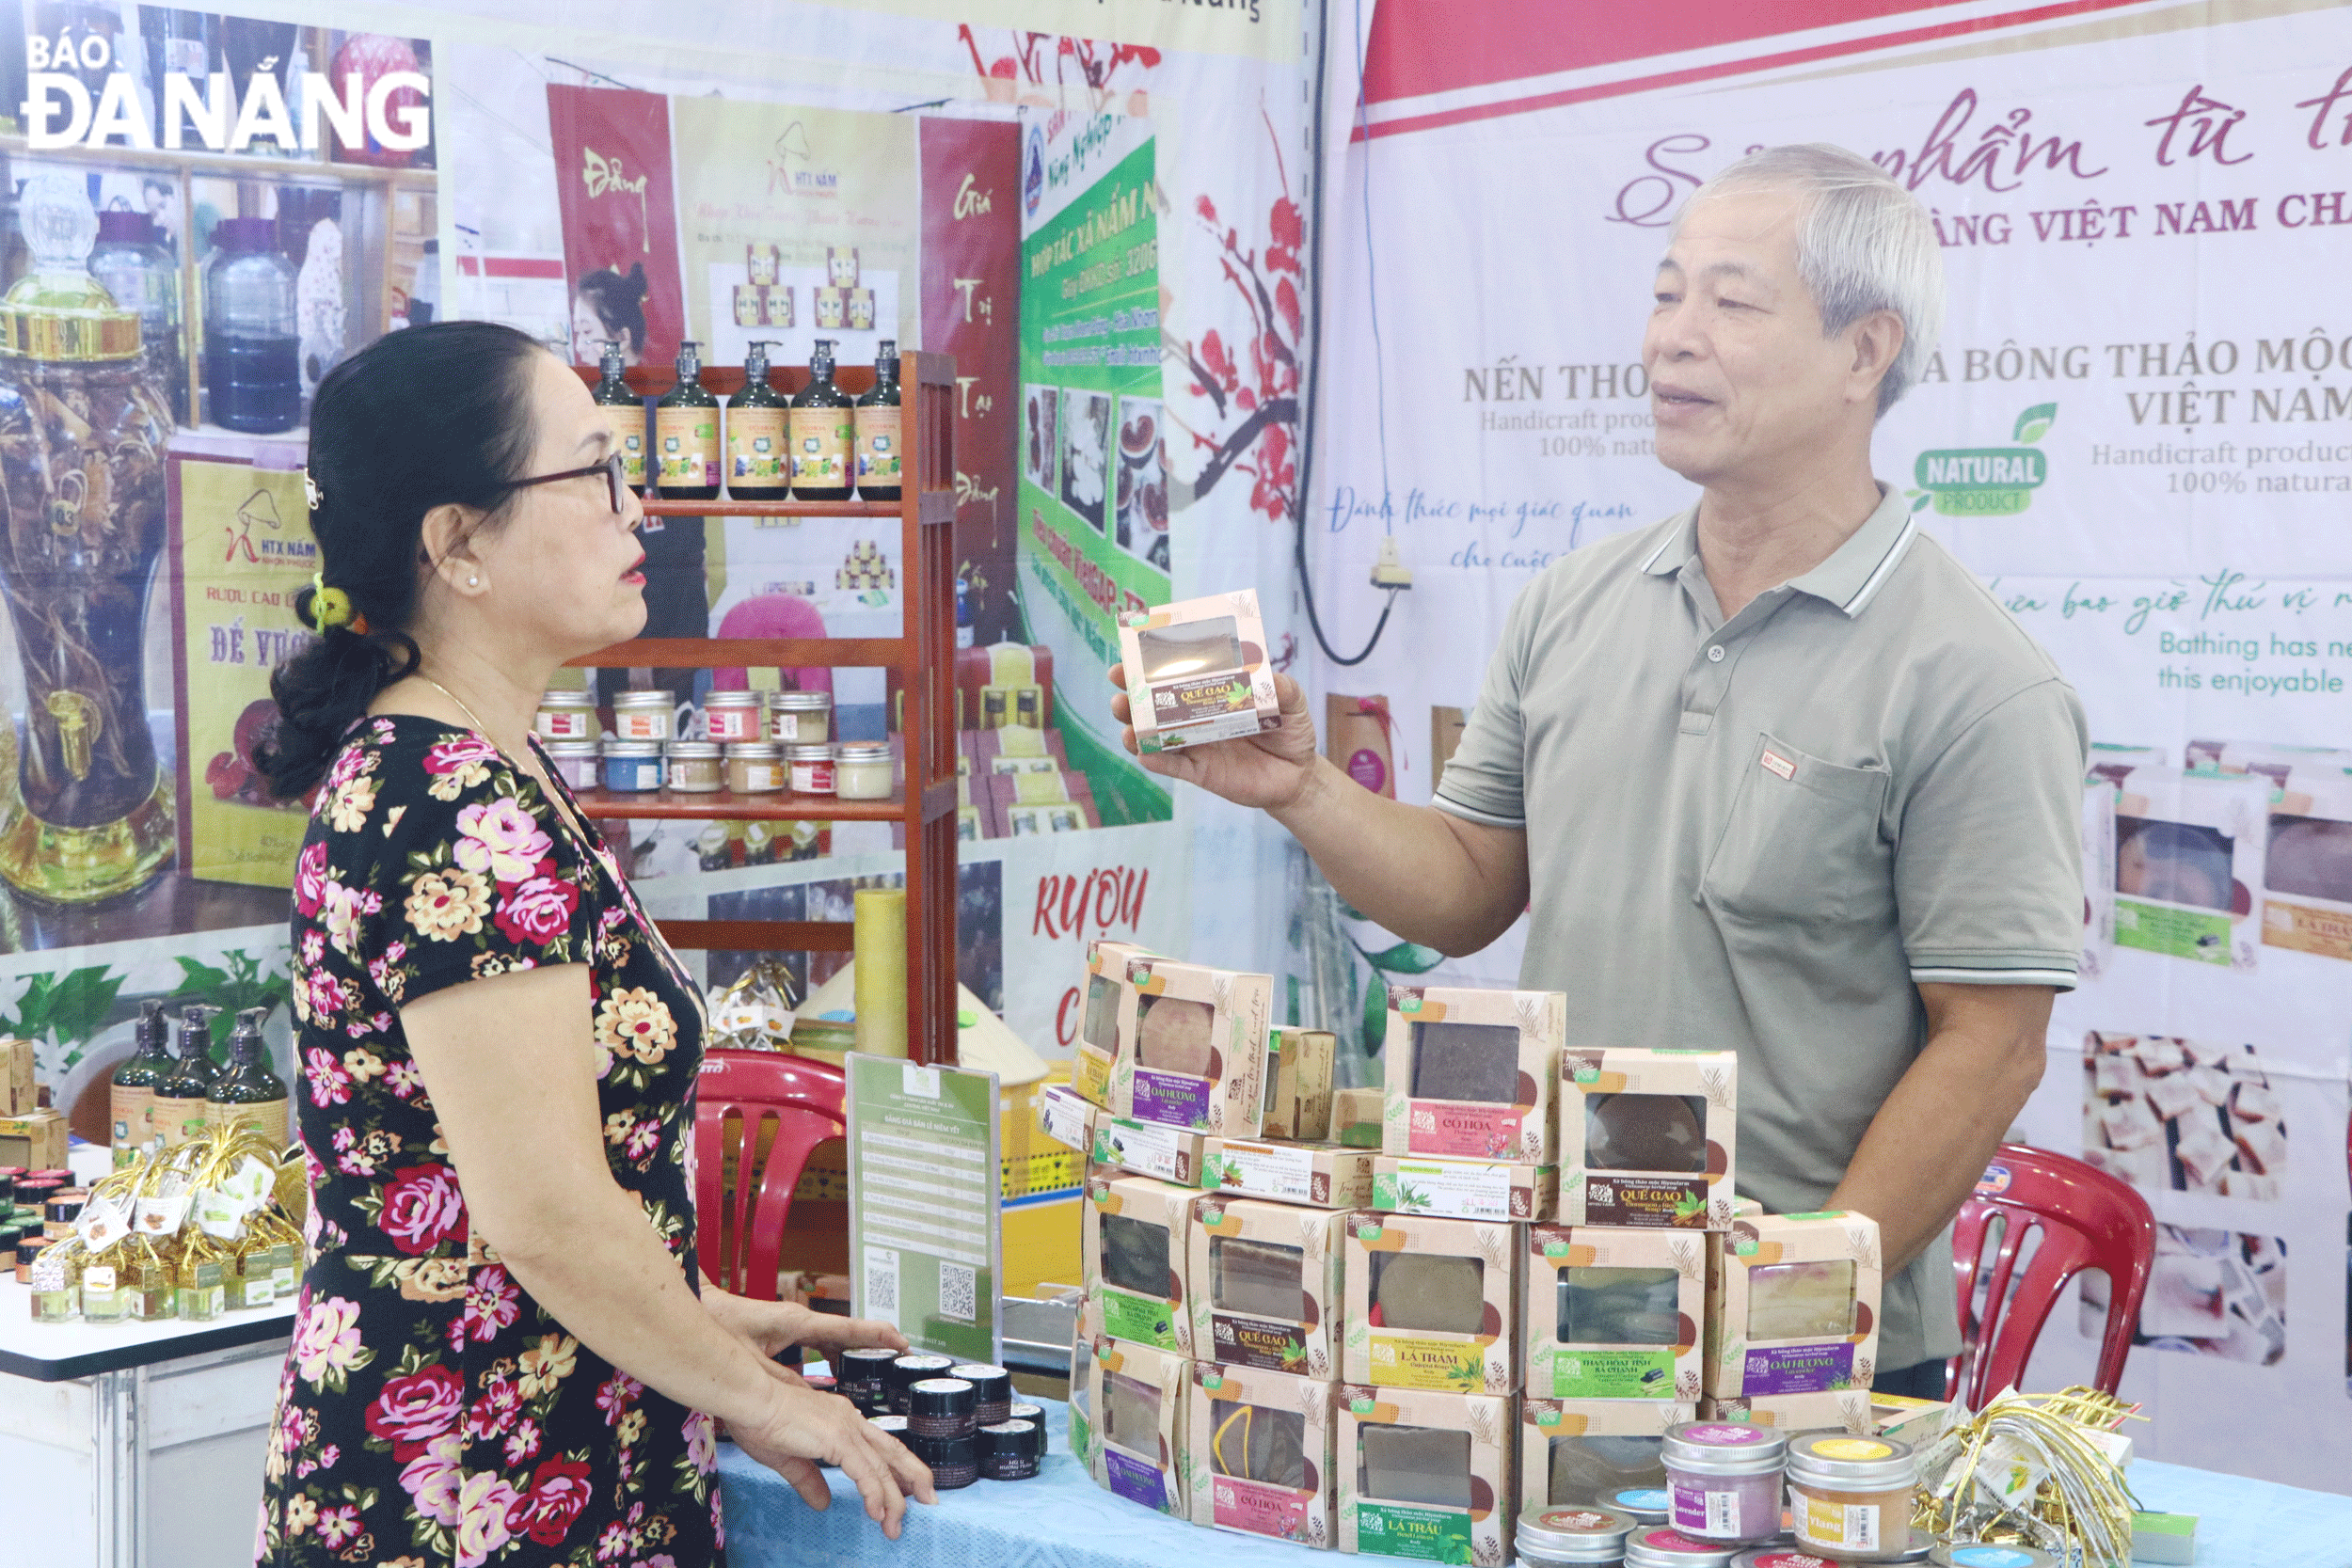 Hiyou Farm herbal soap is being introduced at a trade promotion fair in Da Nang. Photo: VAN HOANG